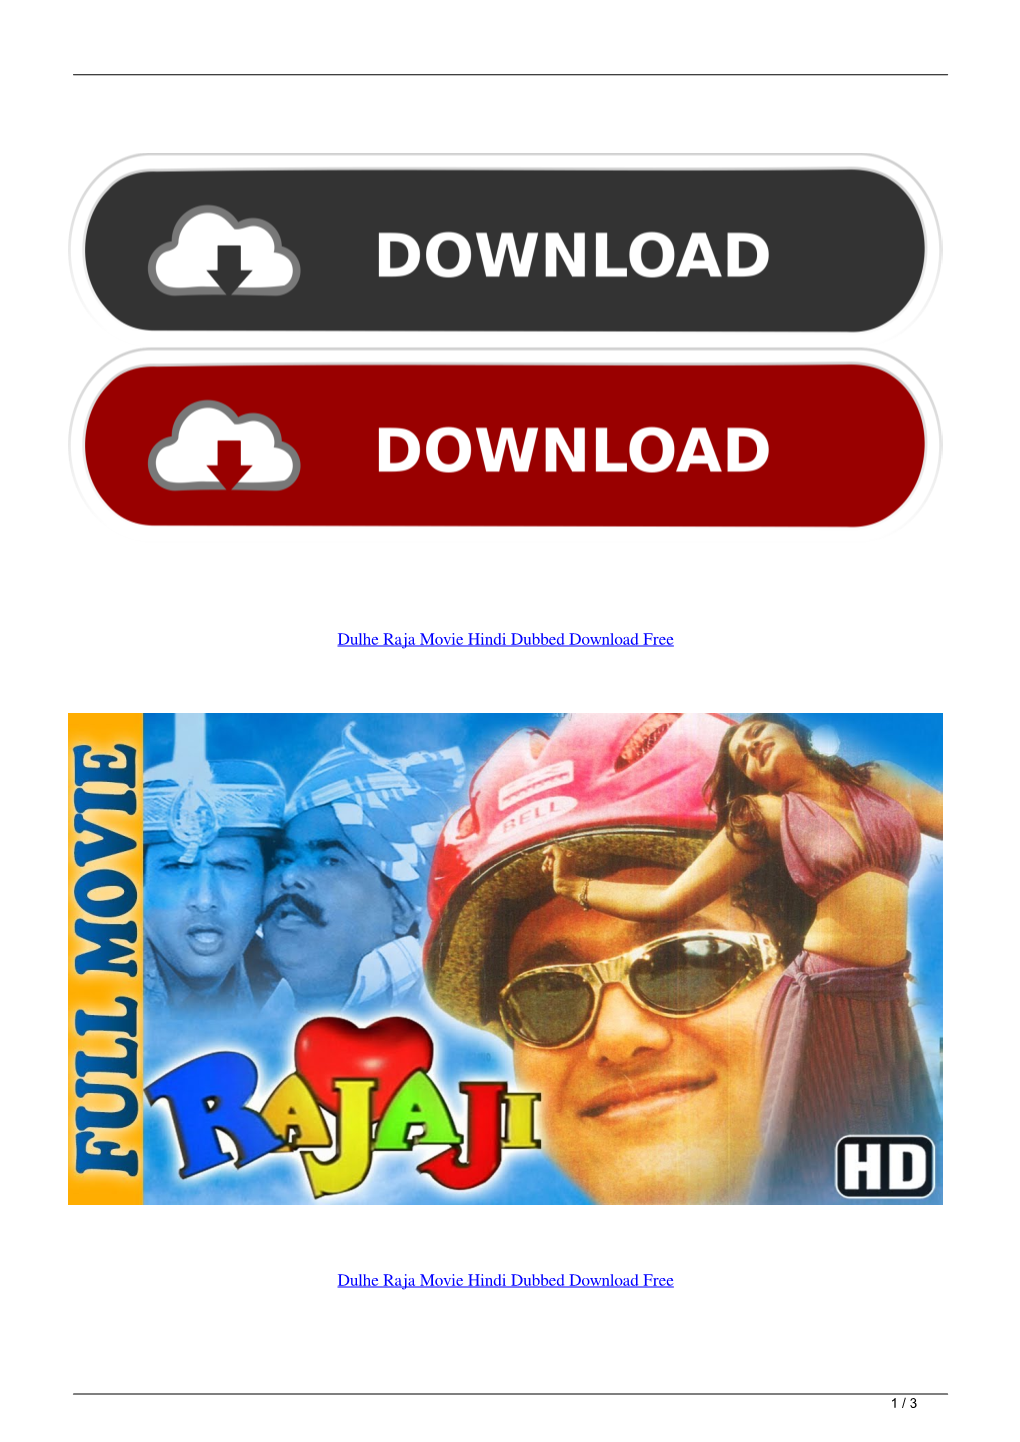 Dulhe Raja Movie Hindi Dubbed Download Free